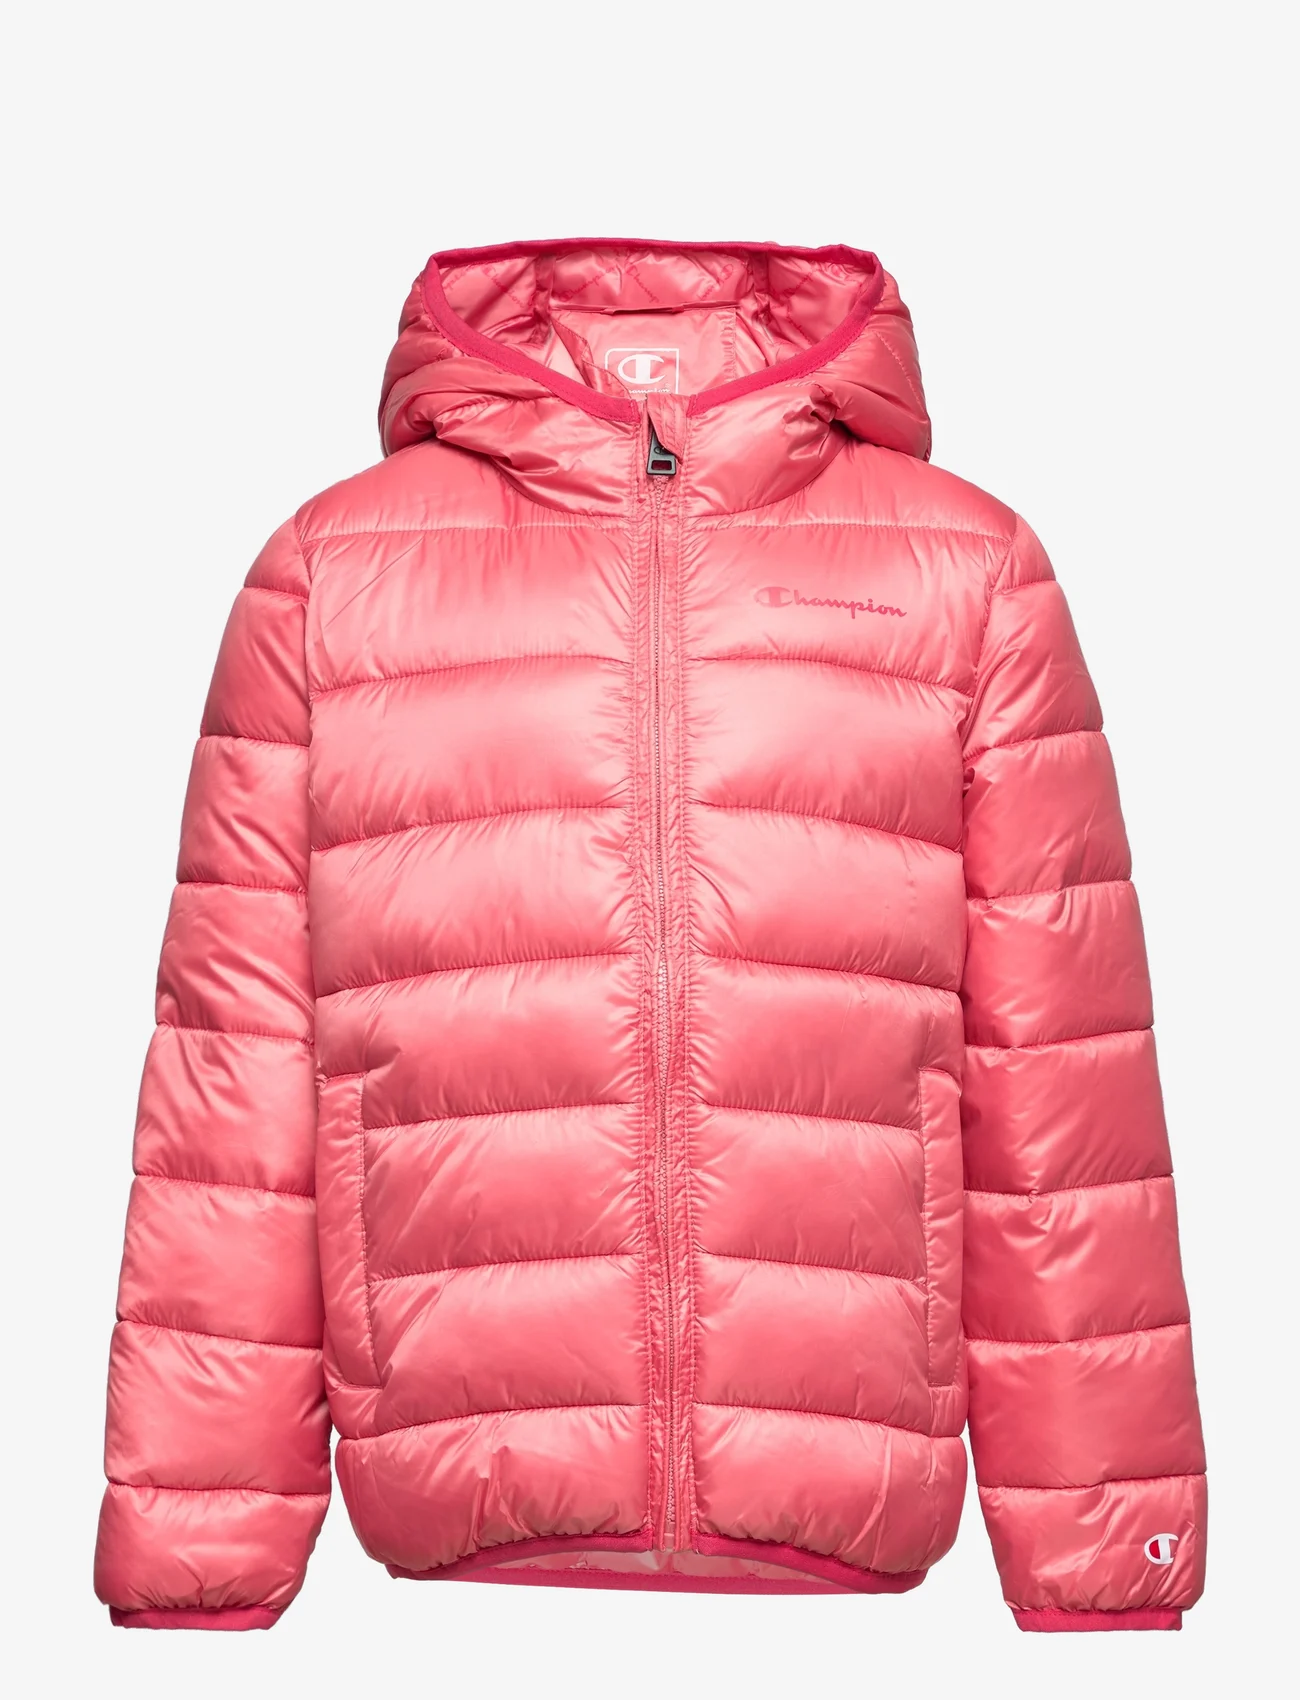 Champion - Hooded Jacket - insulated jackets - tea rose - 0